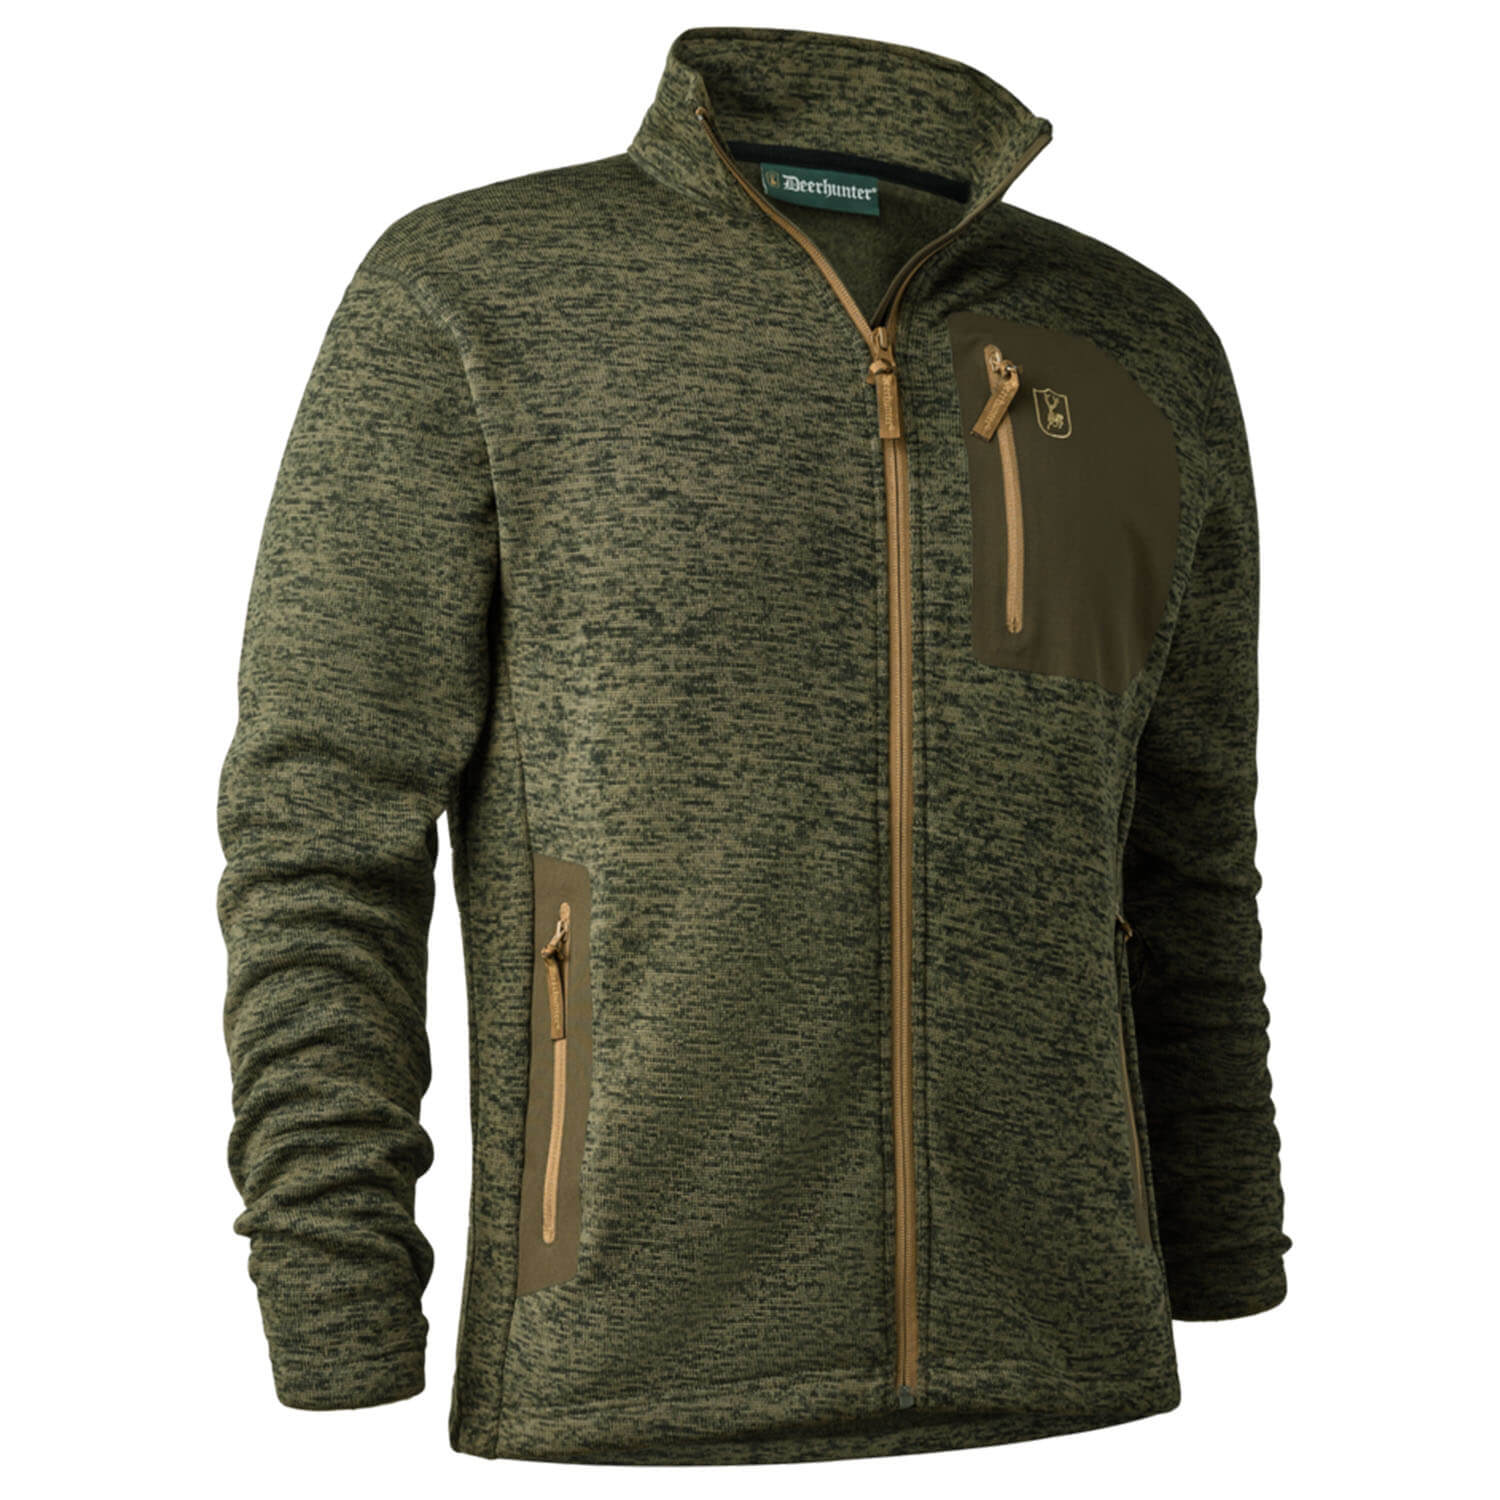 Deerhunter knitt fleece sarek (olive night melange) - Hunting Jackets